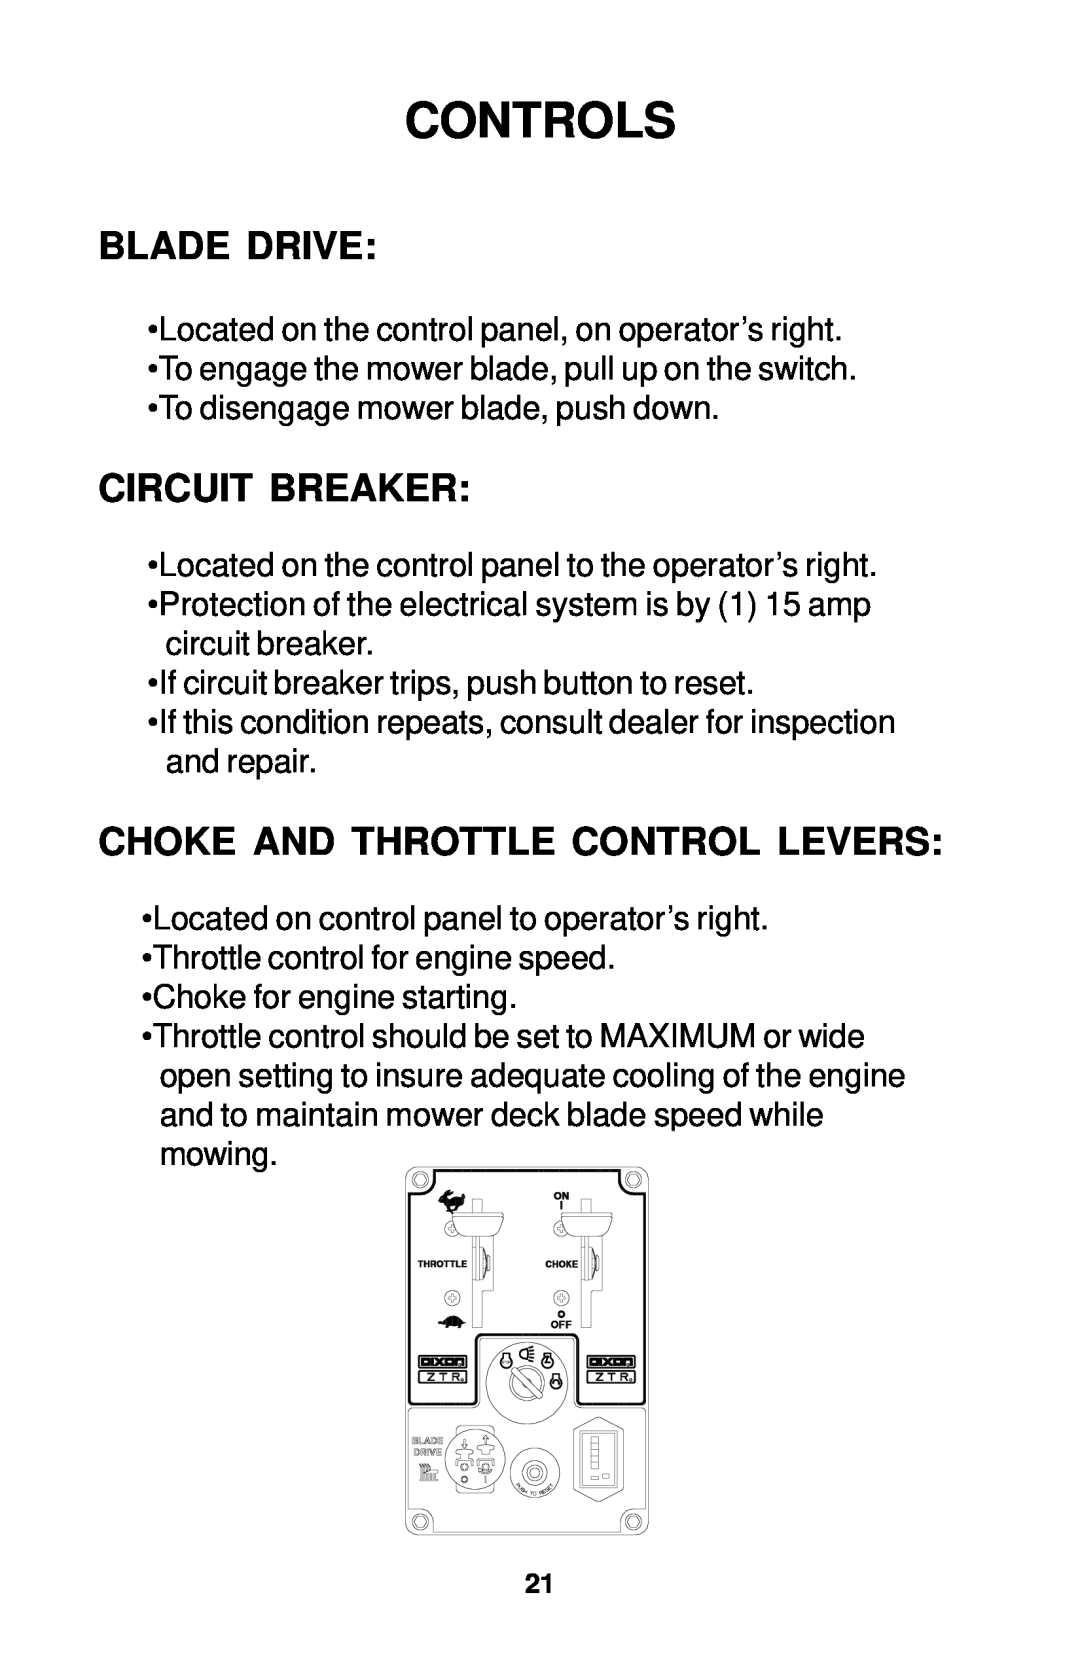 Dixon 18134-1004 manual Blade Drive, Circuit Breaker, Choke And Throttle Control Levers, Controls 